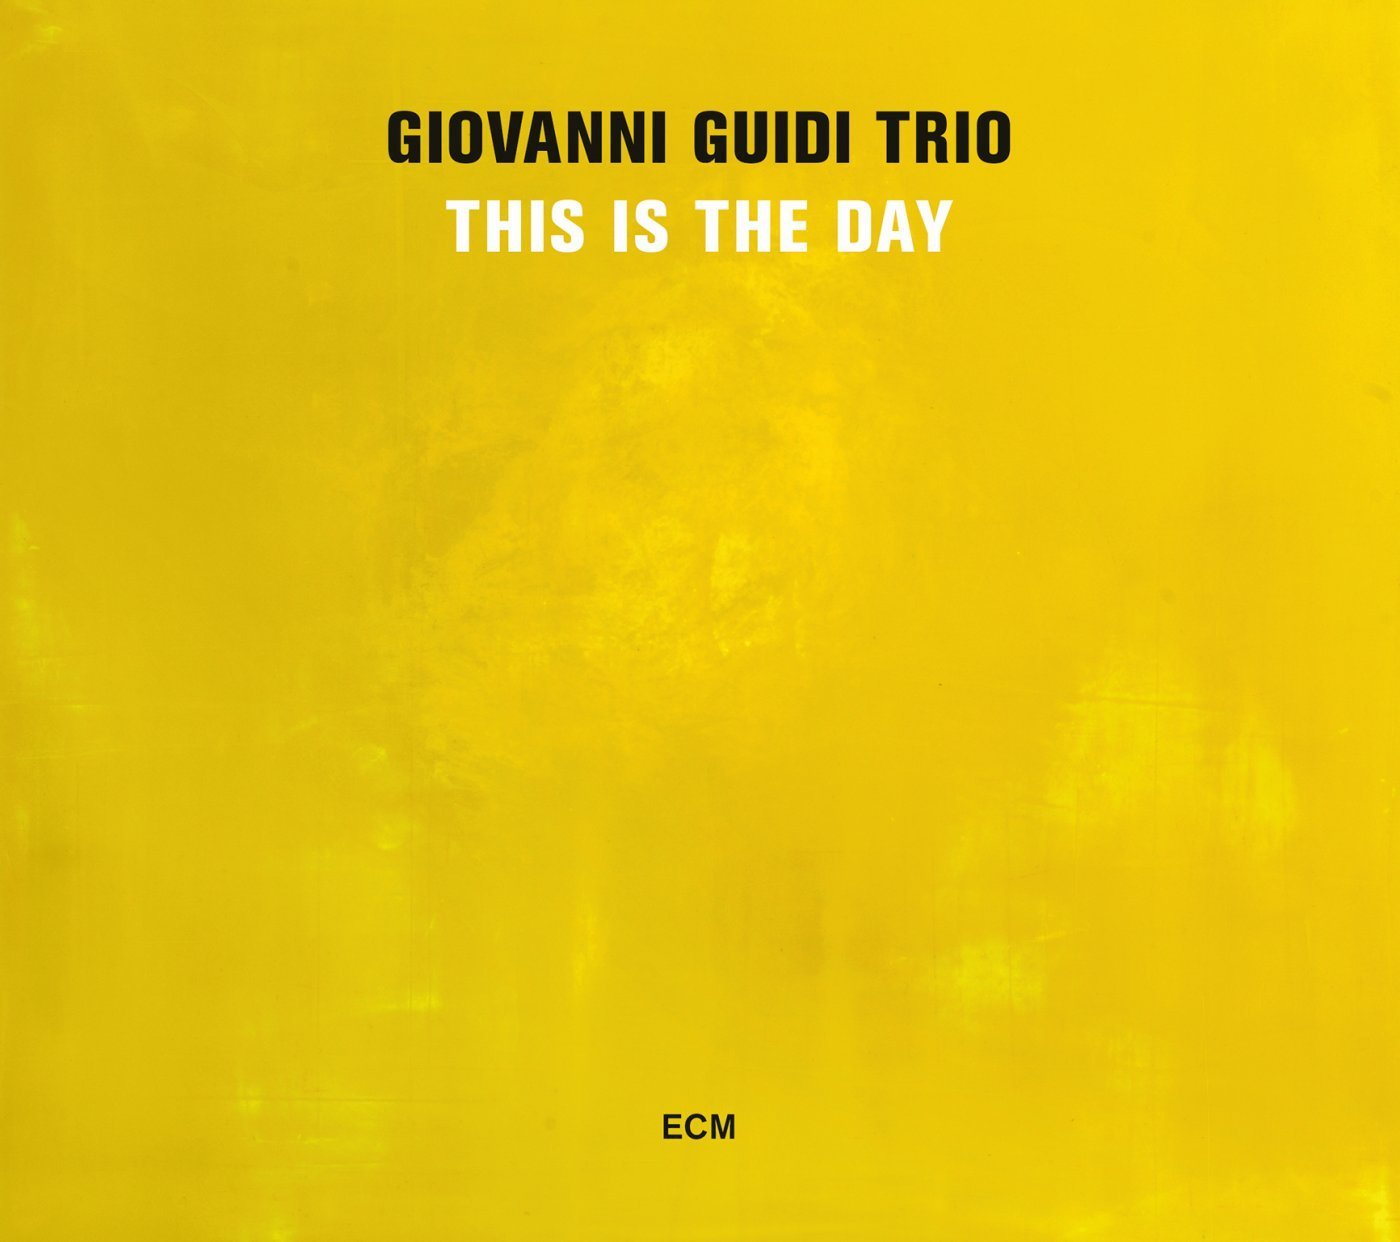 Giovanni Guidi Trio This is the day